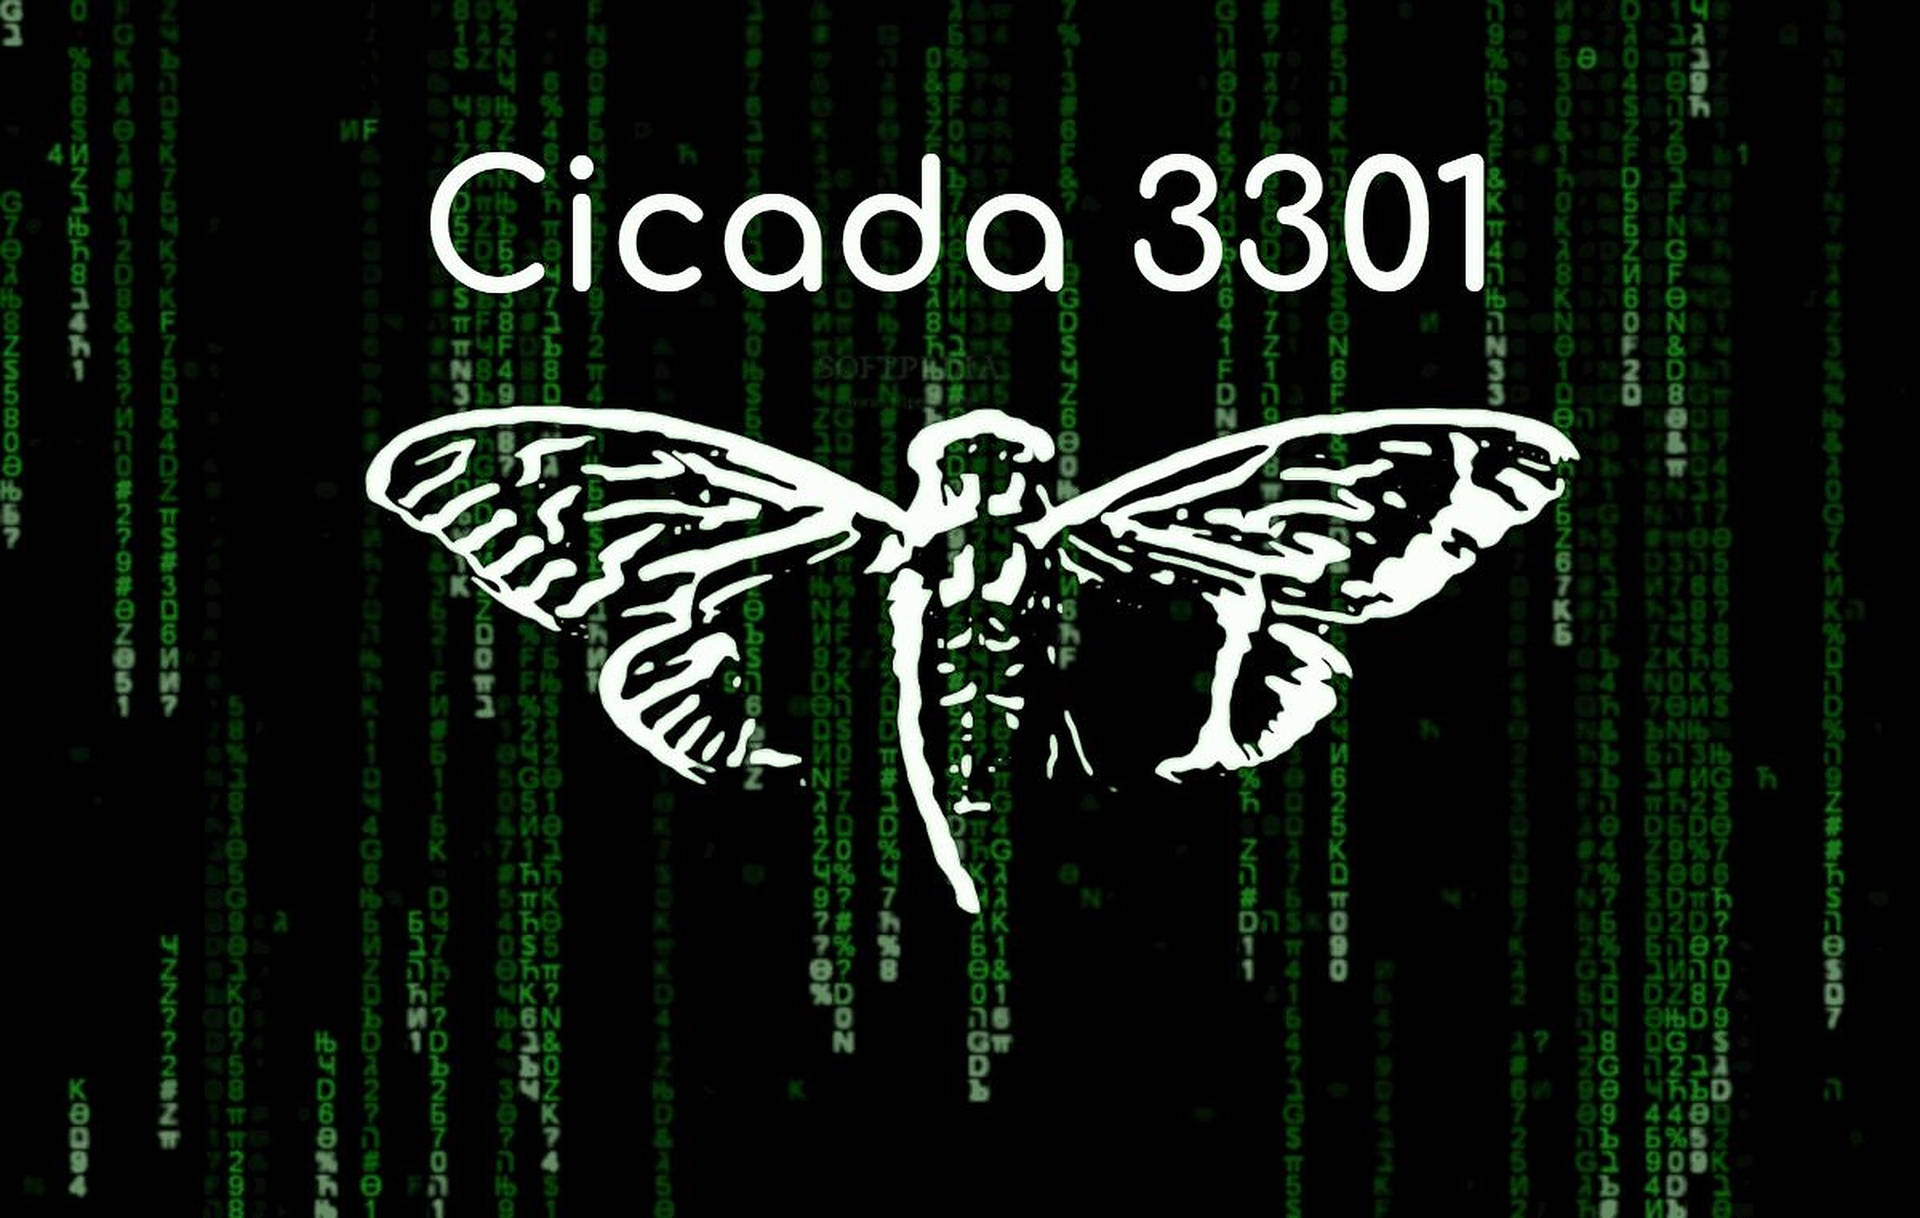 Cicadamatrix-kunst Wallpaper